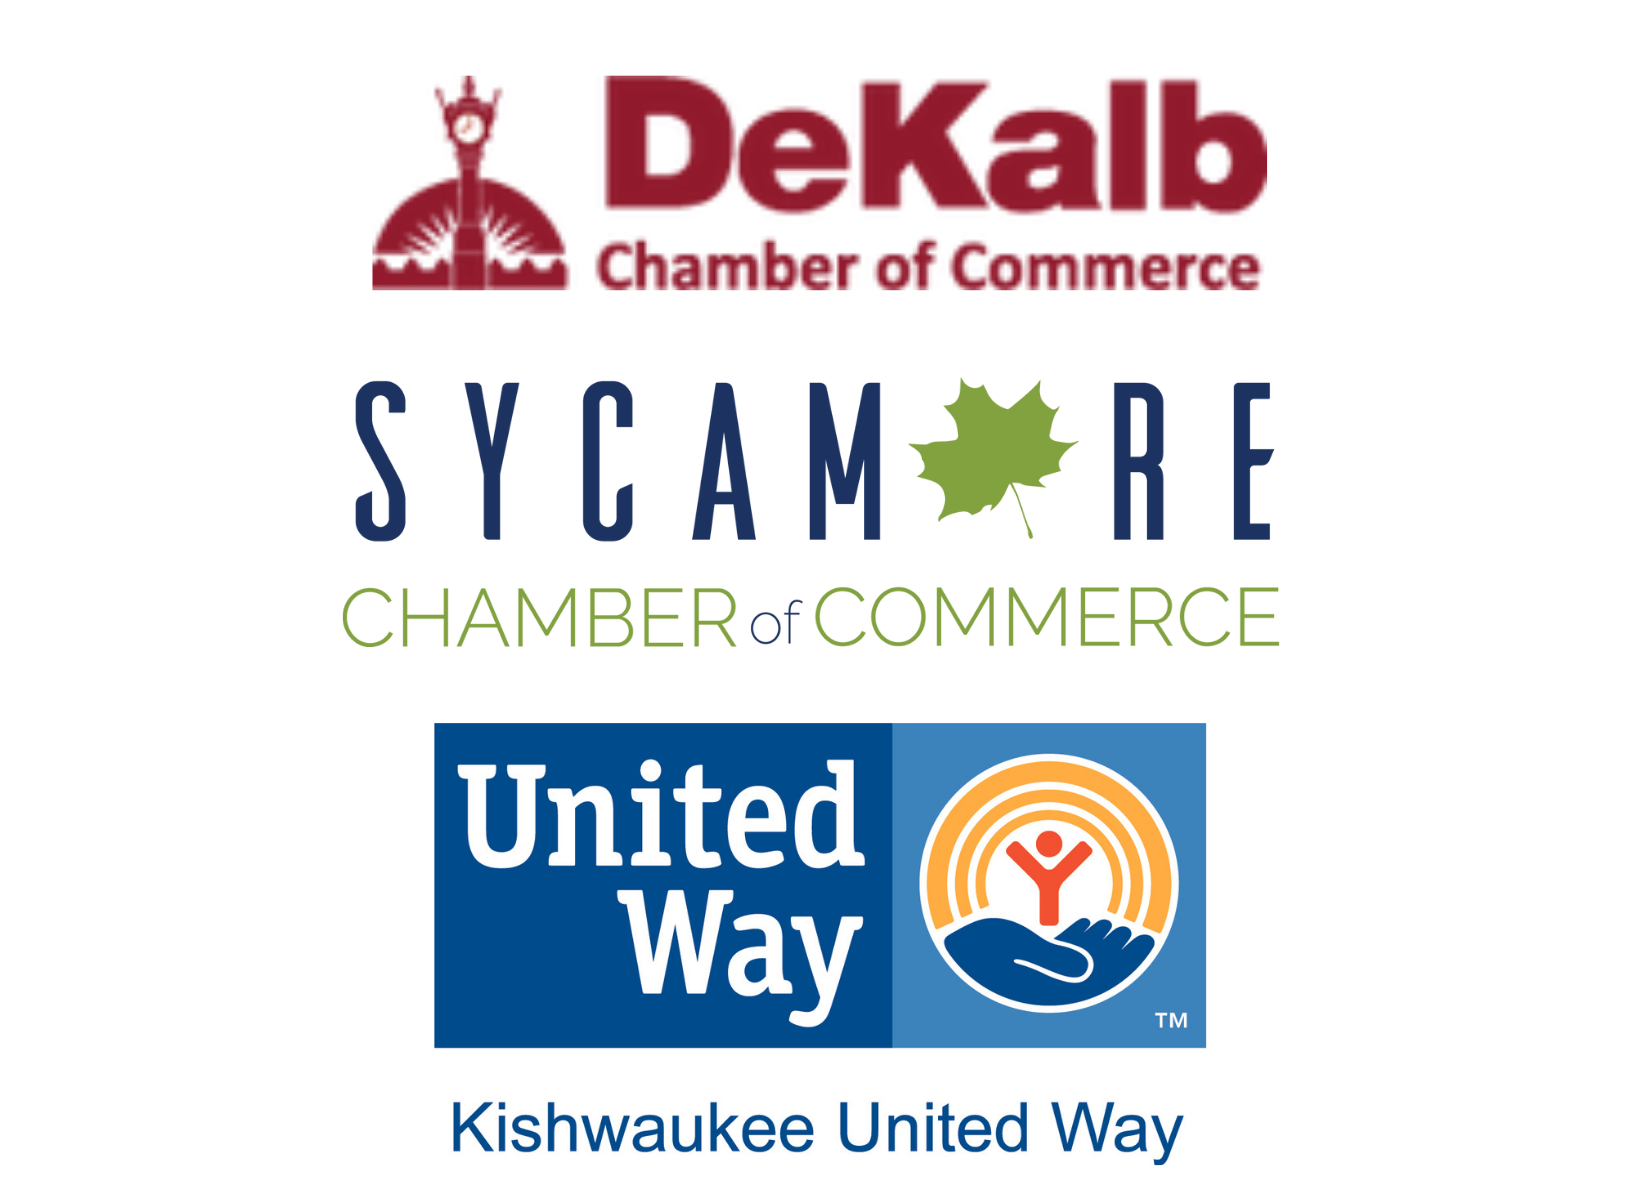 DeKalb Chamber, Sycamore Chamber and KUW logos